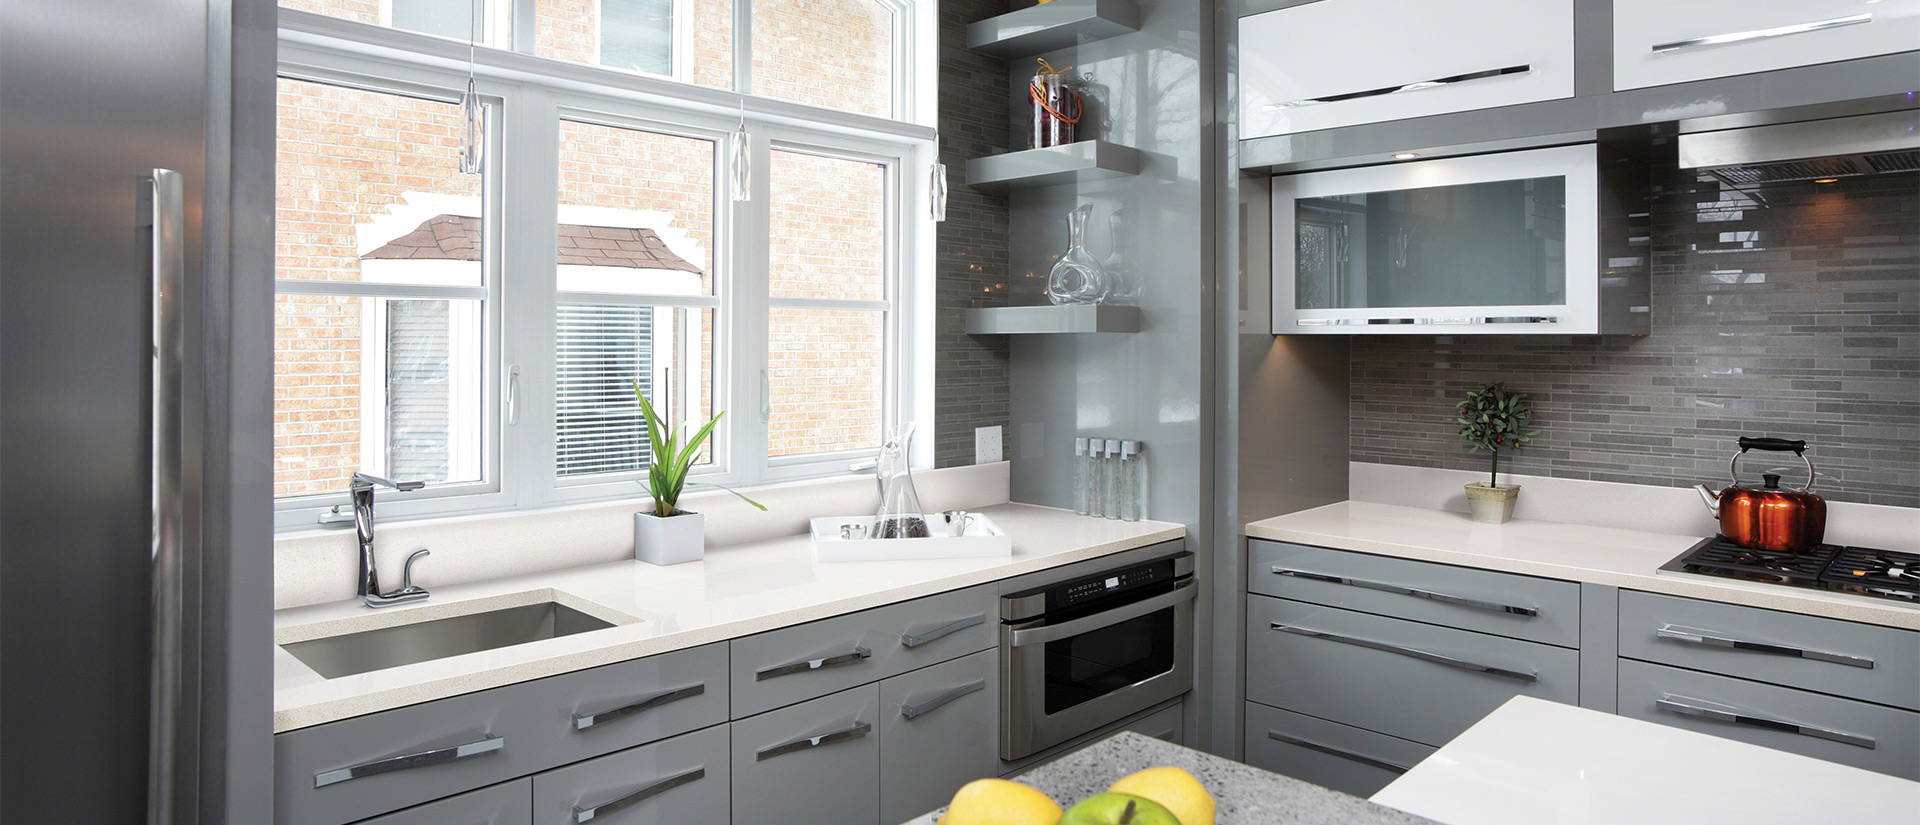 Frost White Quartz countertop in a modern and elegant kitchen